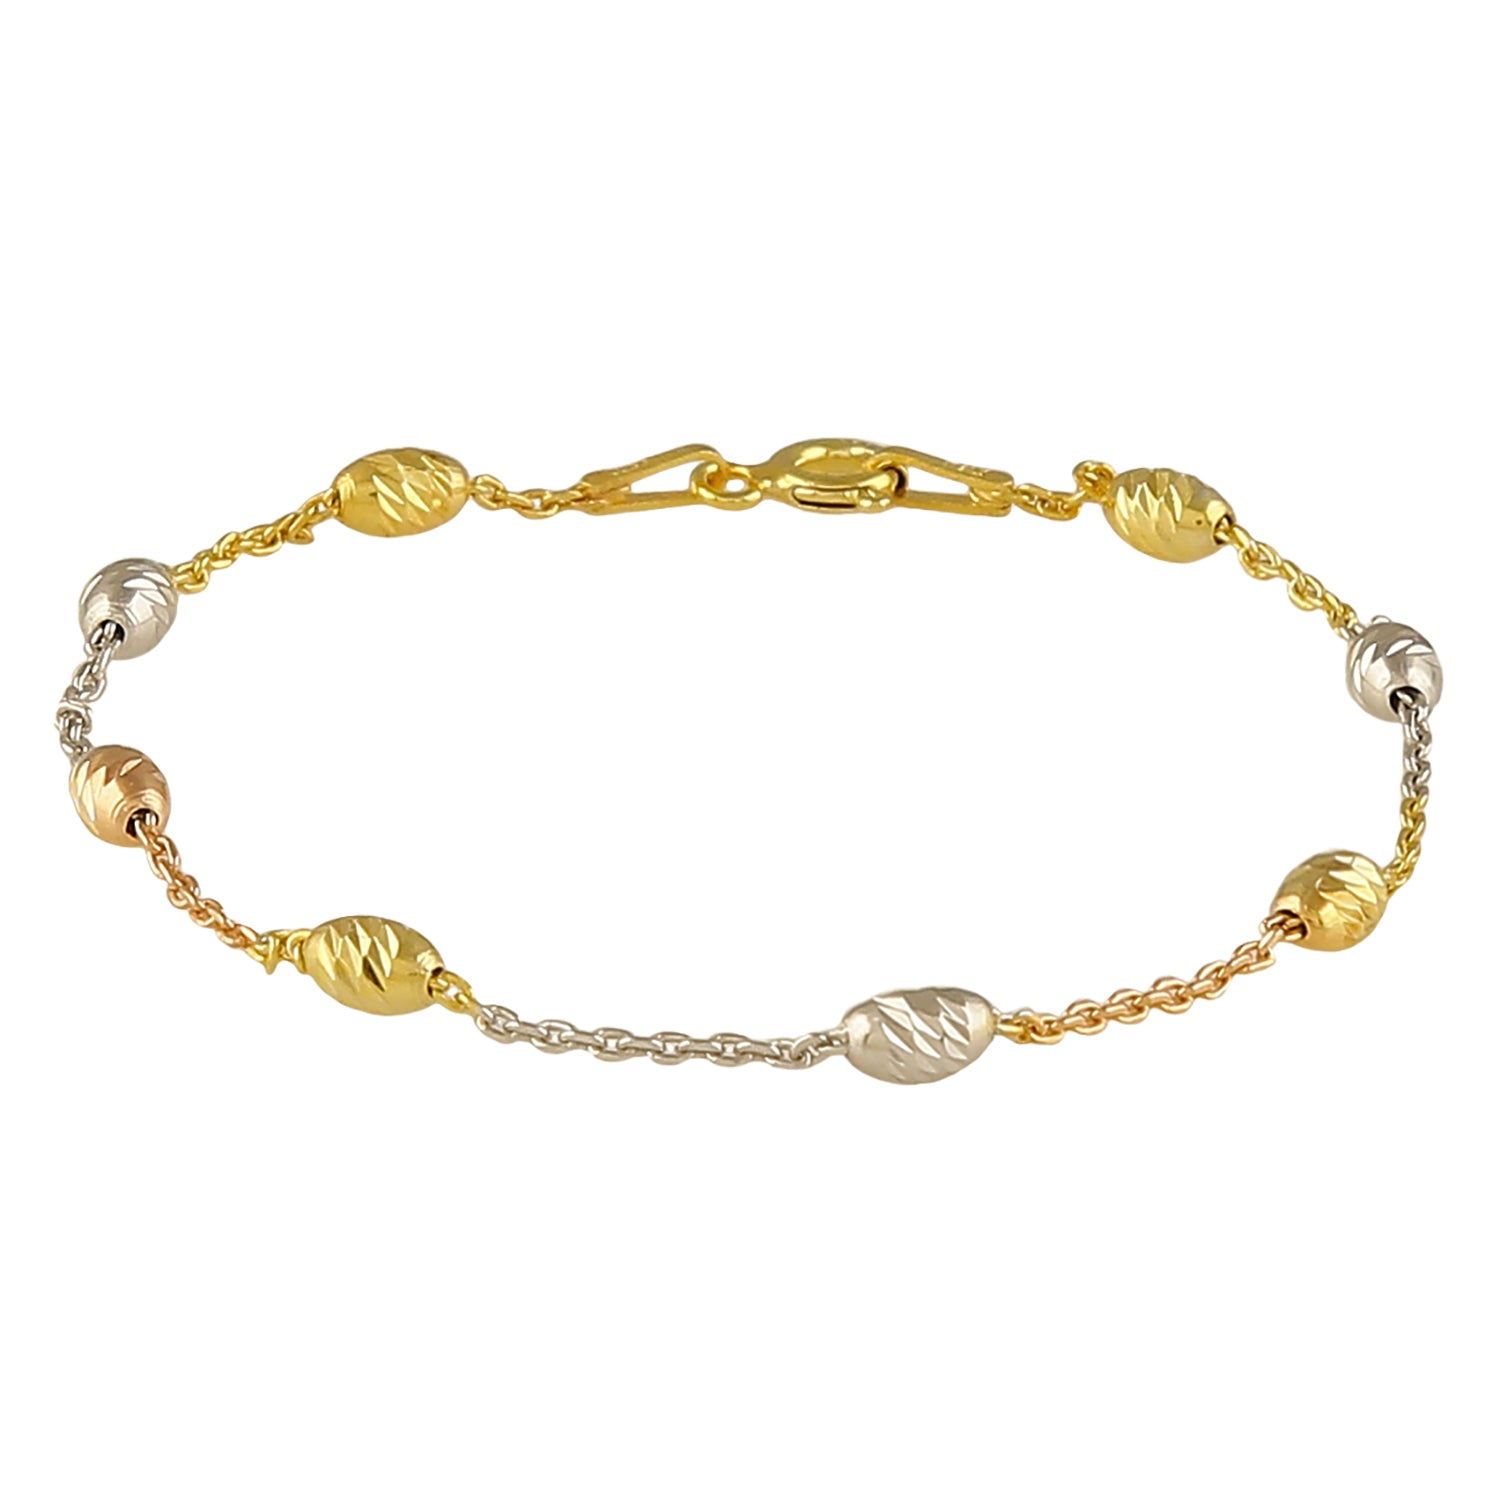 Buy Malabar Gold & Diamonds BIS Hallmark (916) 22k Yellow Gold Bracelet For  Women, Loose Bracelet at Amazon.in